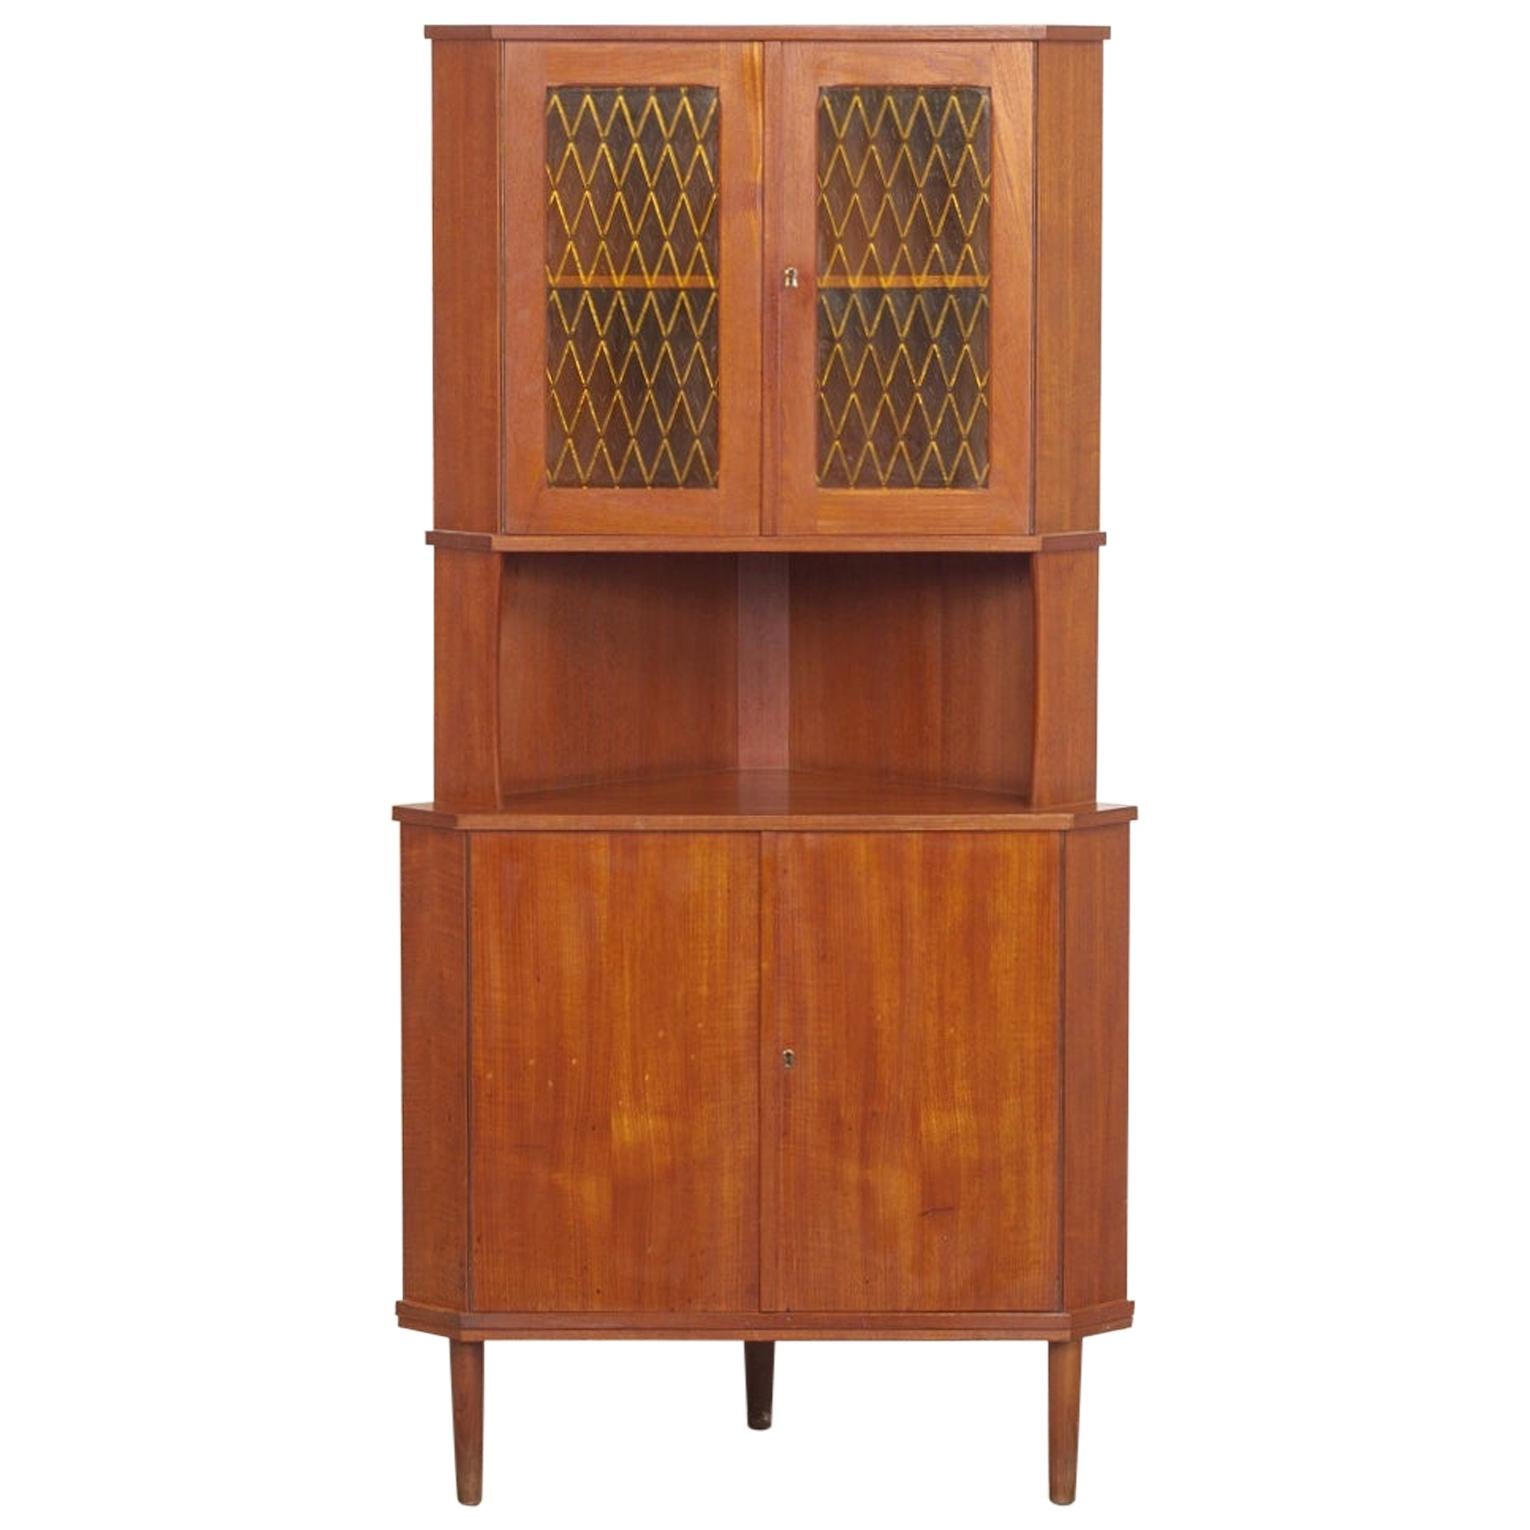 Midcentury Danish Modern Teak Wood & Glass Corner China Cabinet Storage Hutch